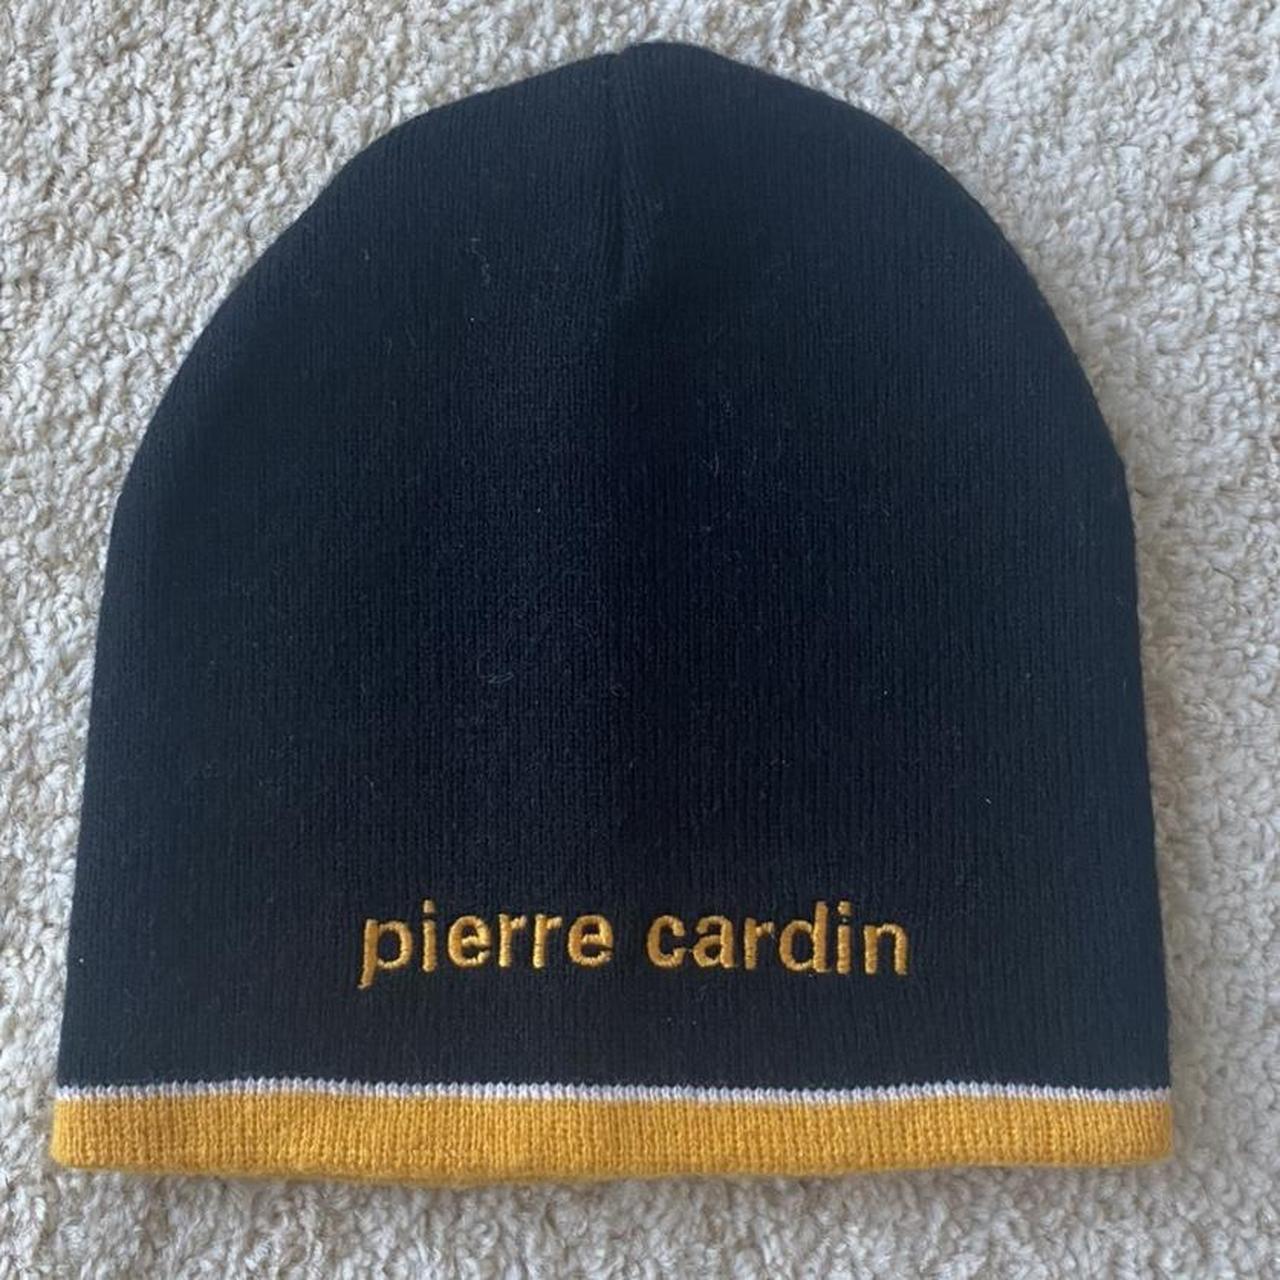 Pierre Cardin Women's Yellow and Black Hat